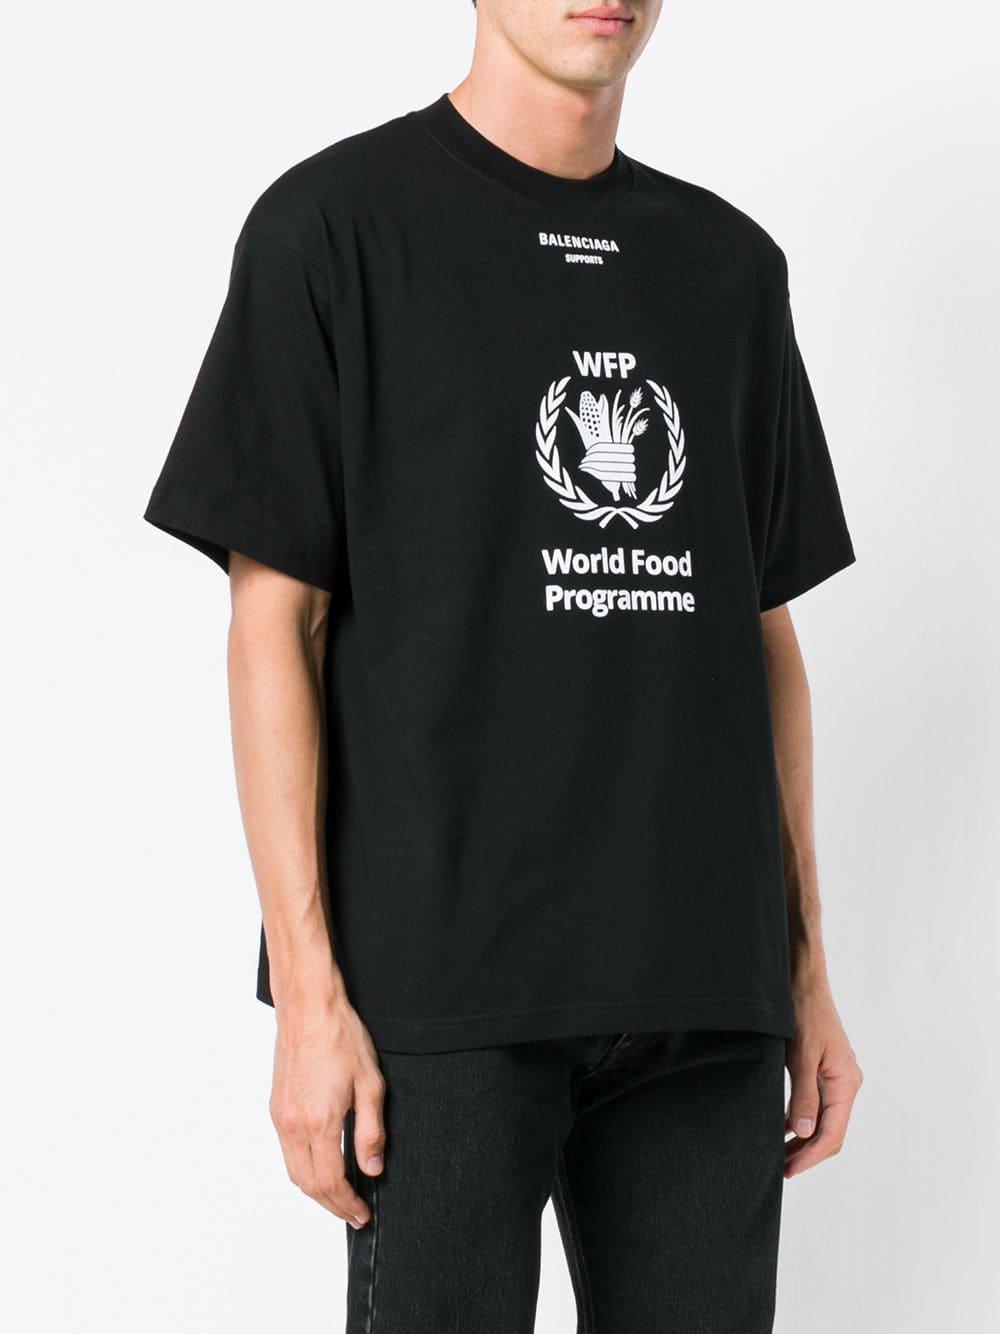 Balenciaga World Food Programme T-shirt in Black for Men - Lyst